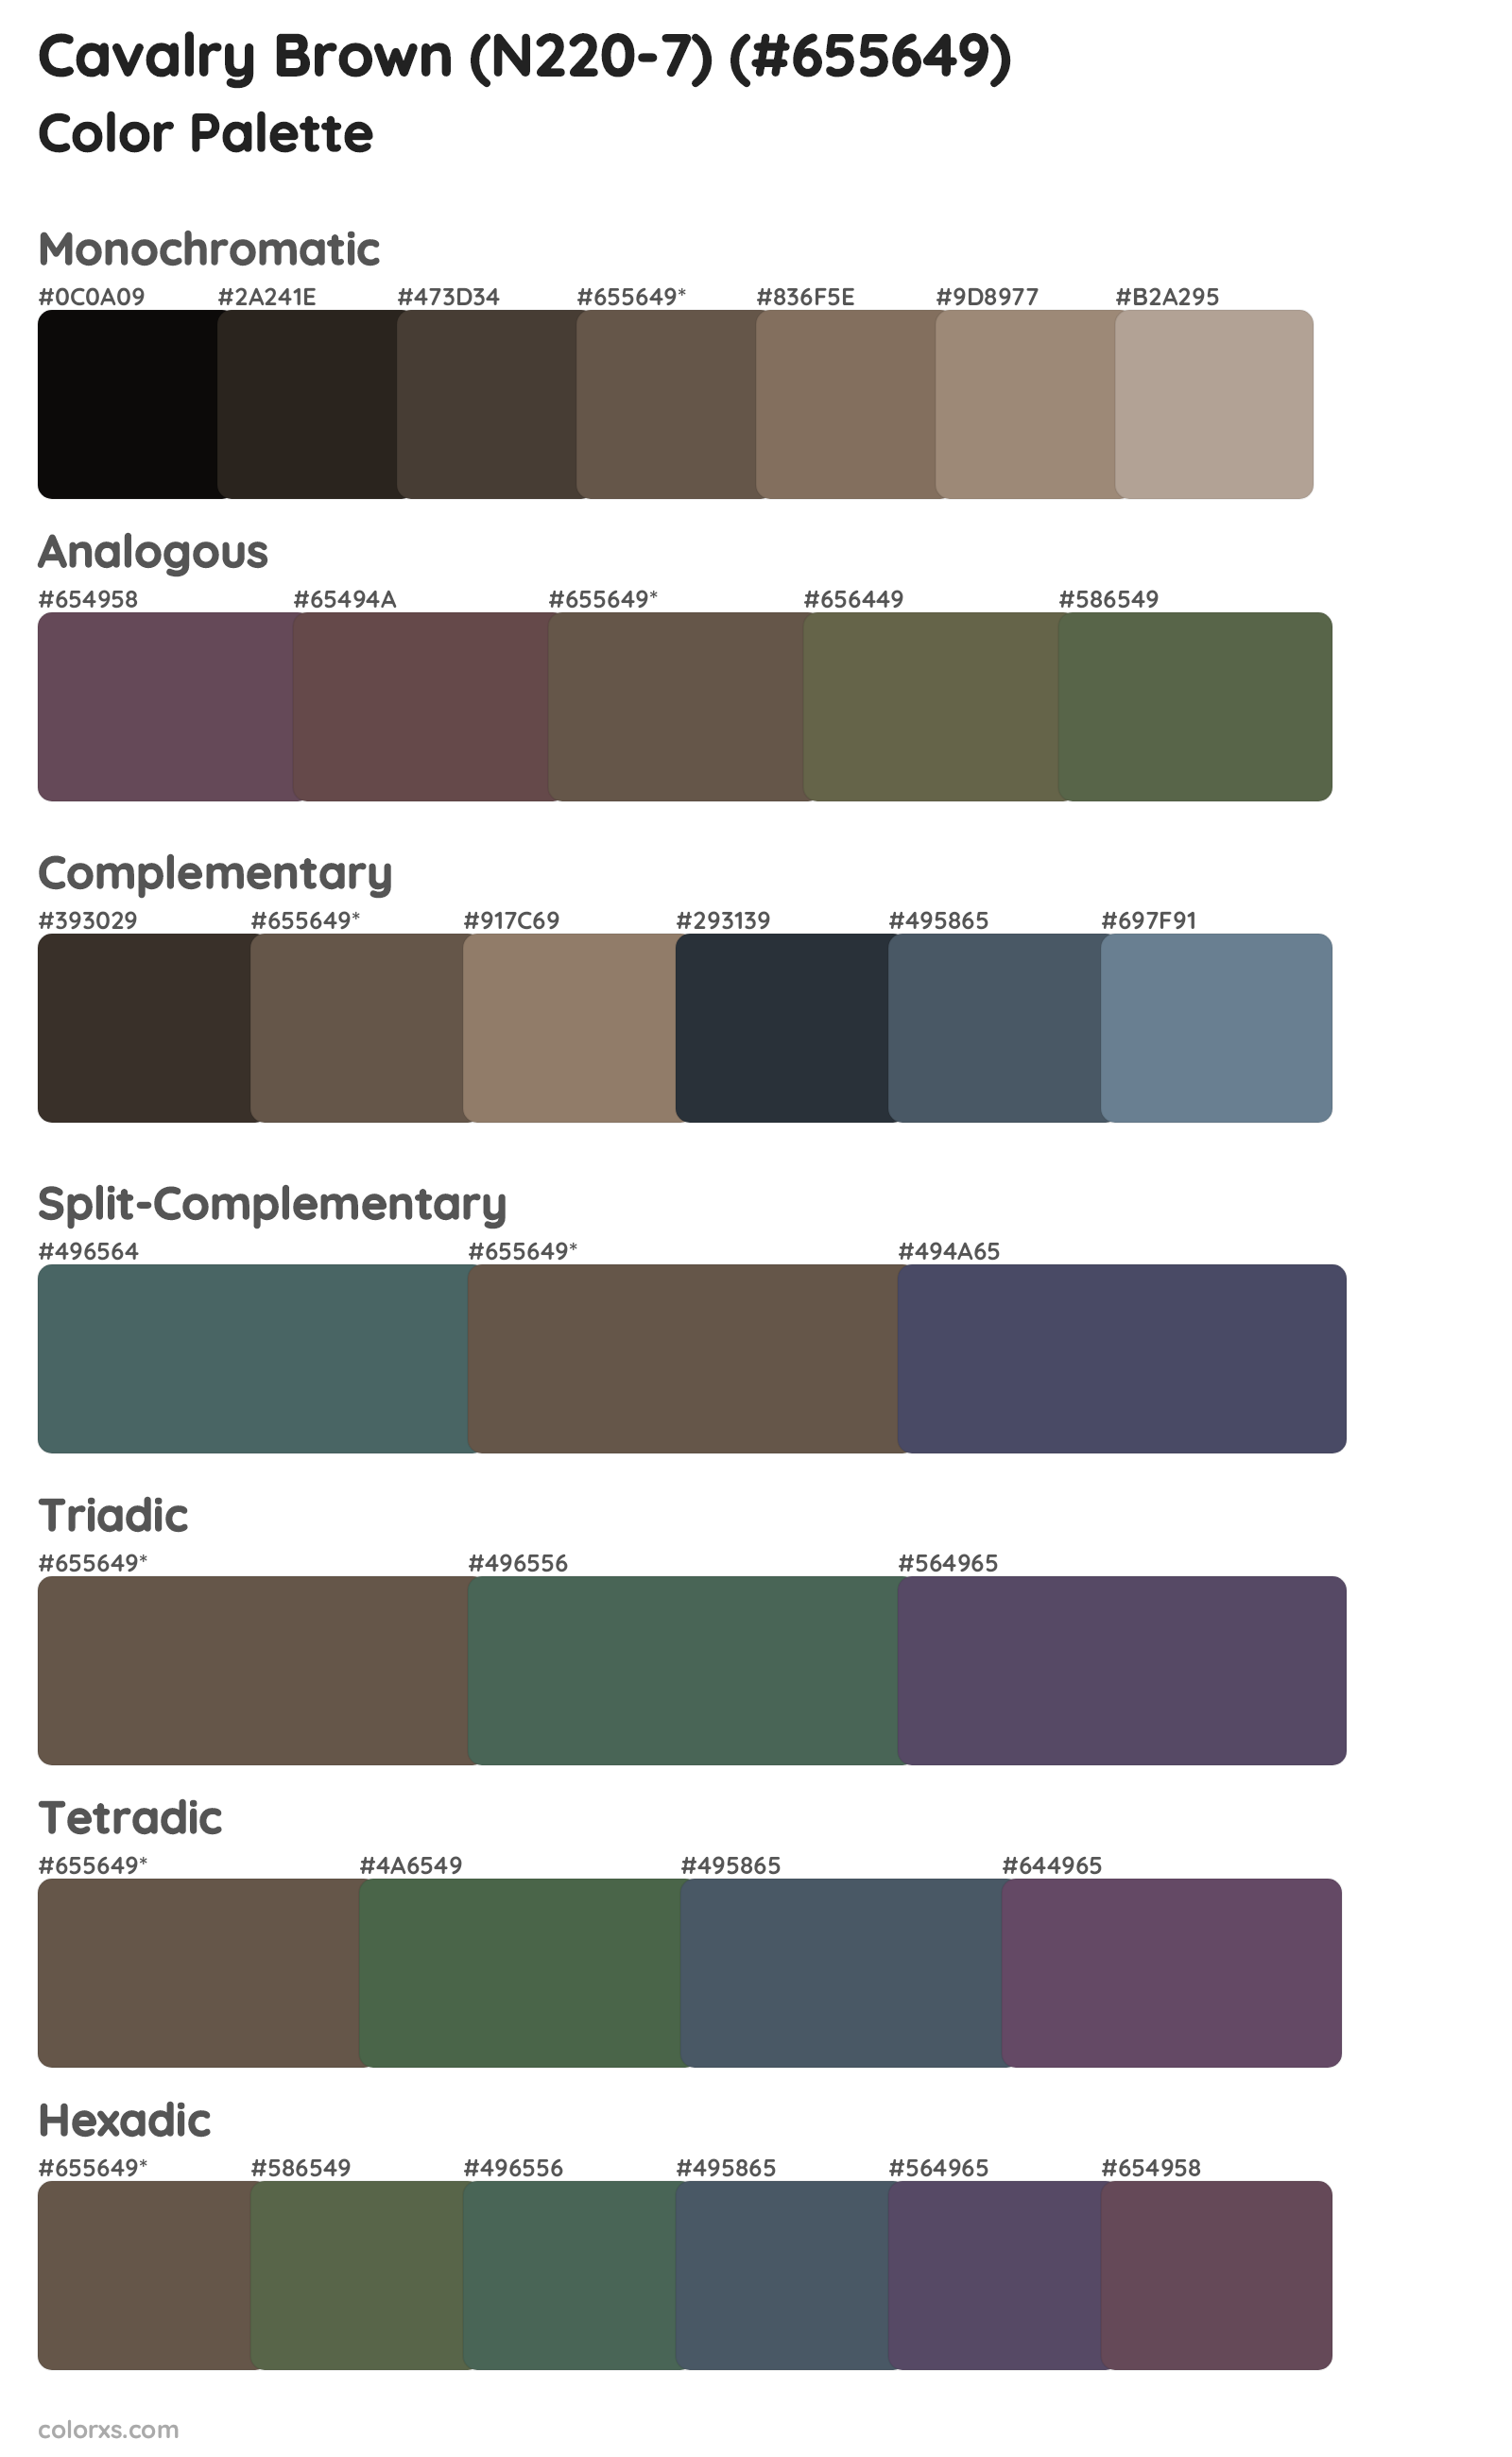 Cavalry Brown (N220-7) Color Scheme Palettes